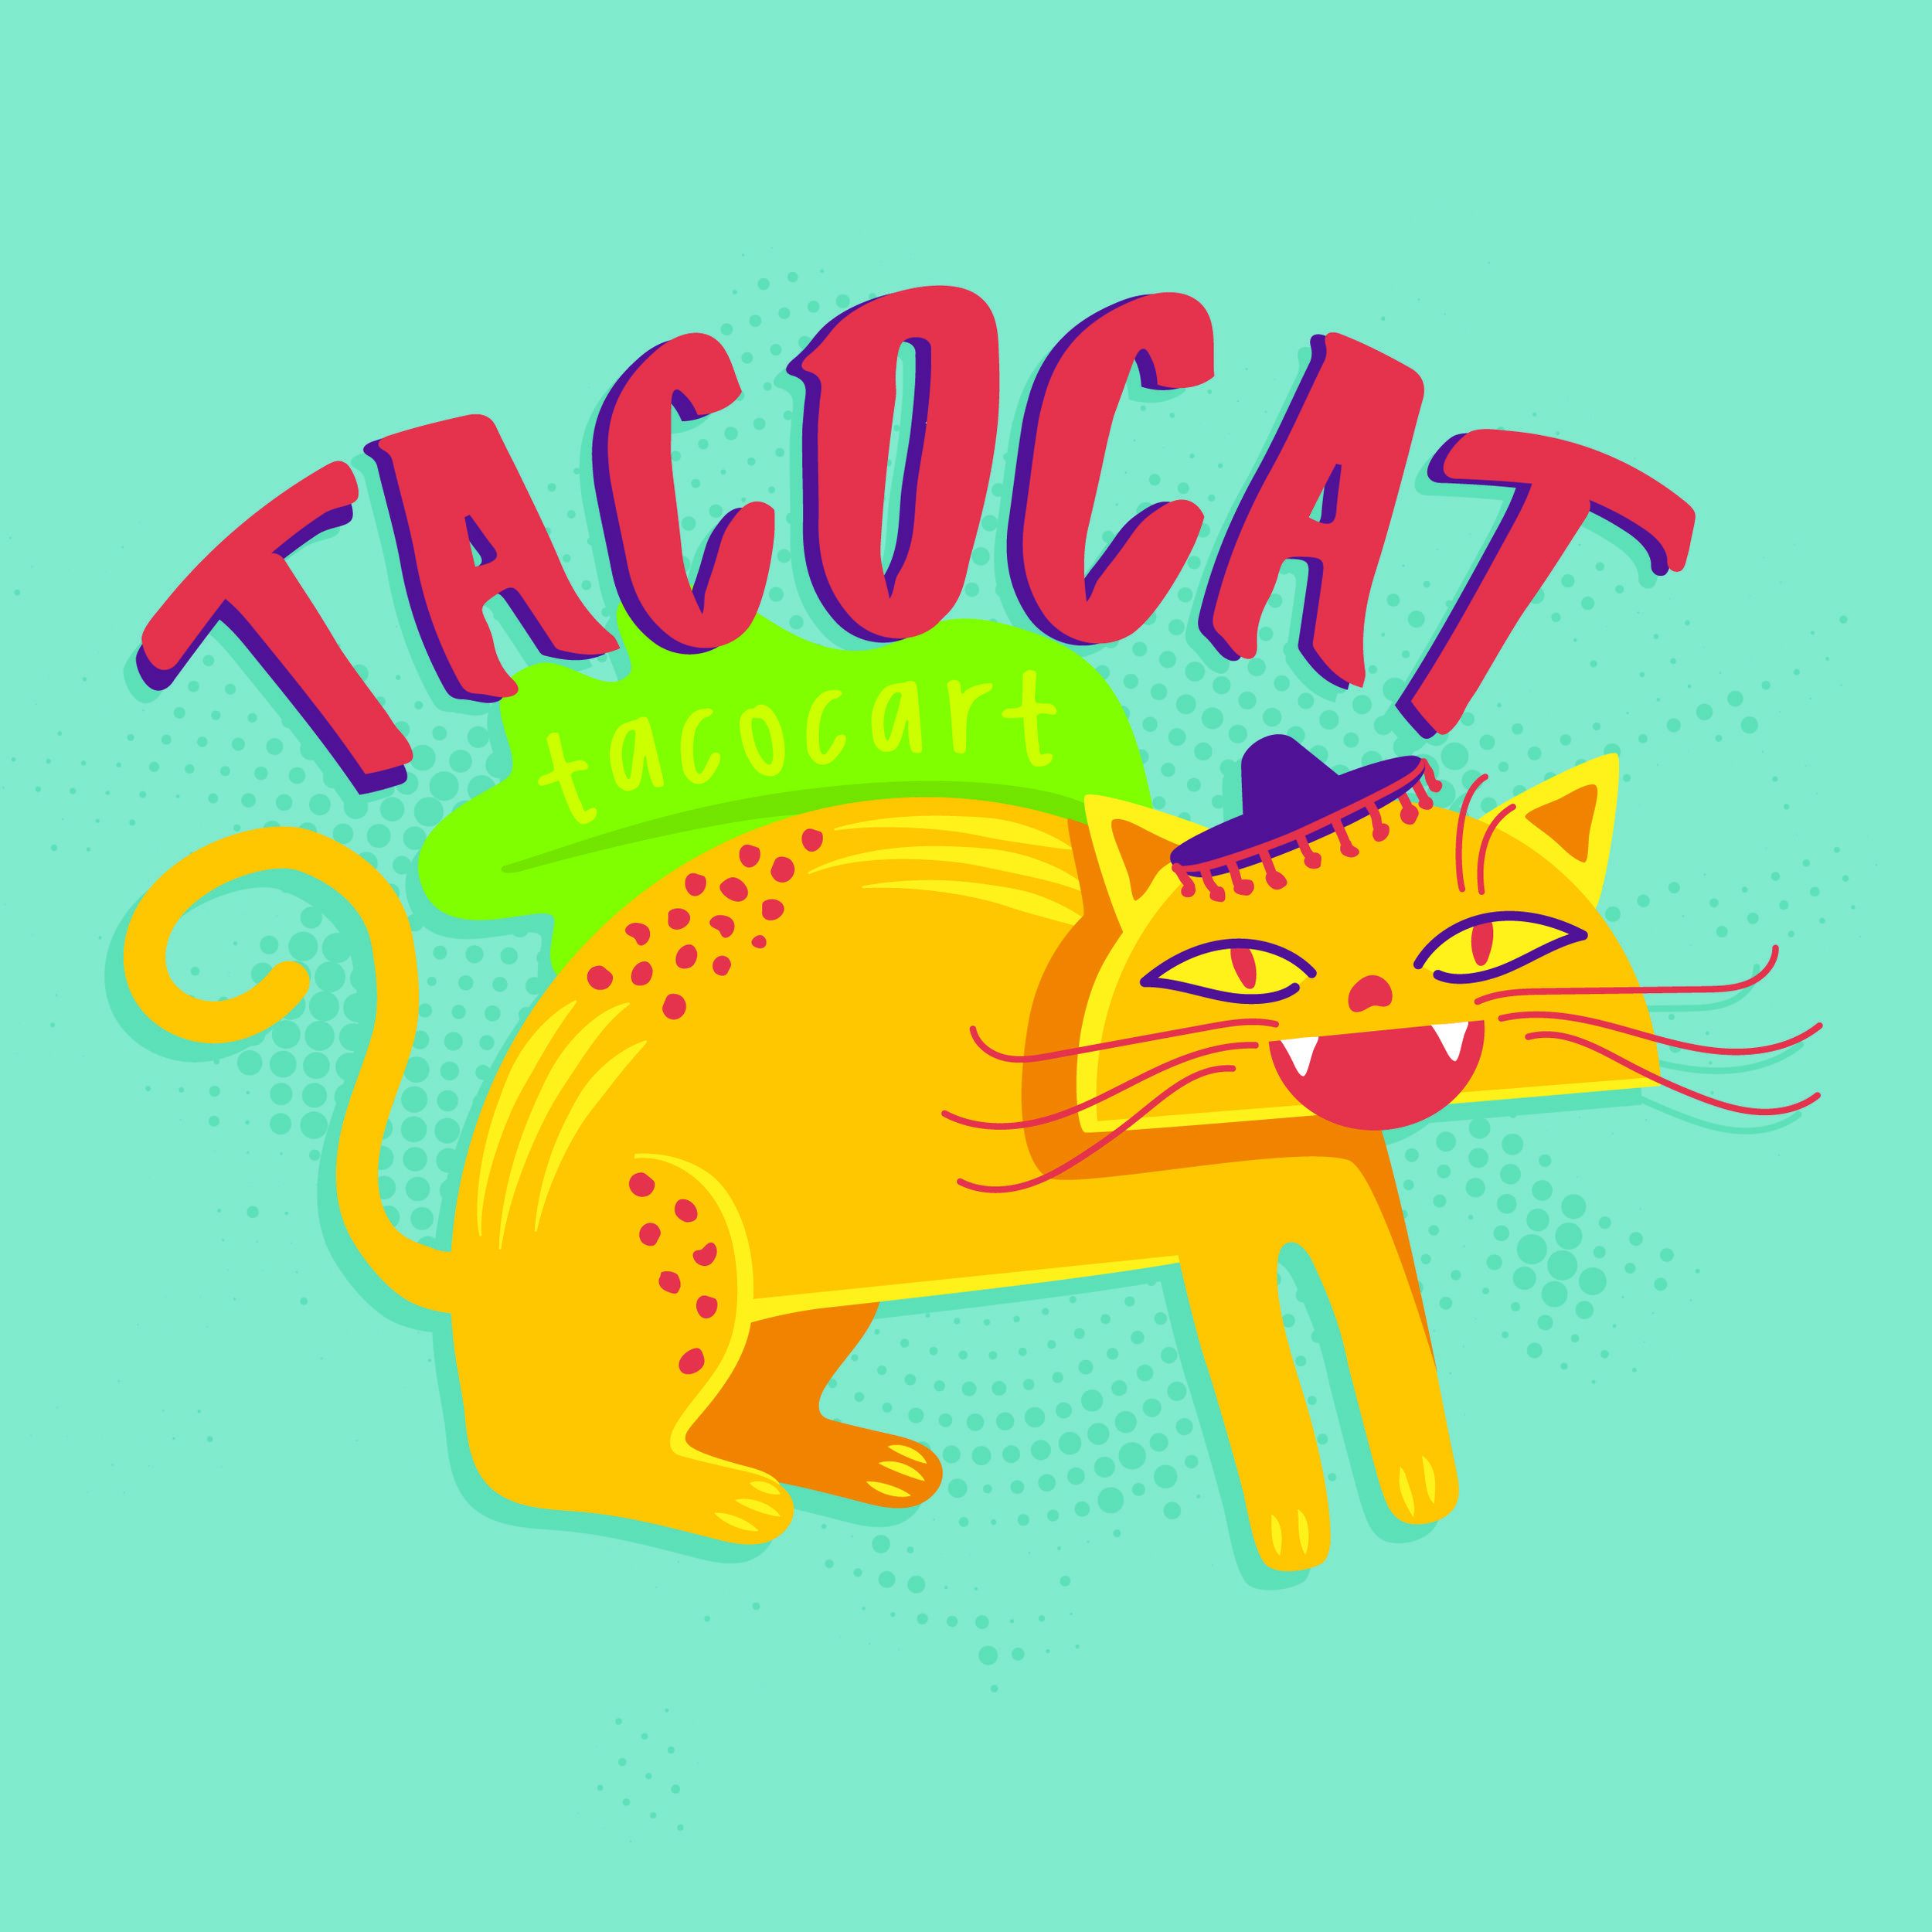 Tacocat Tacocart in Gunnison, CO